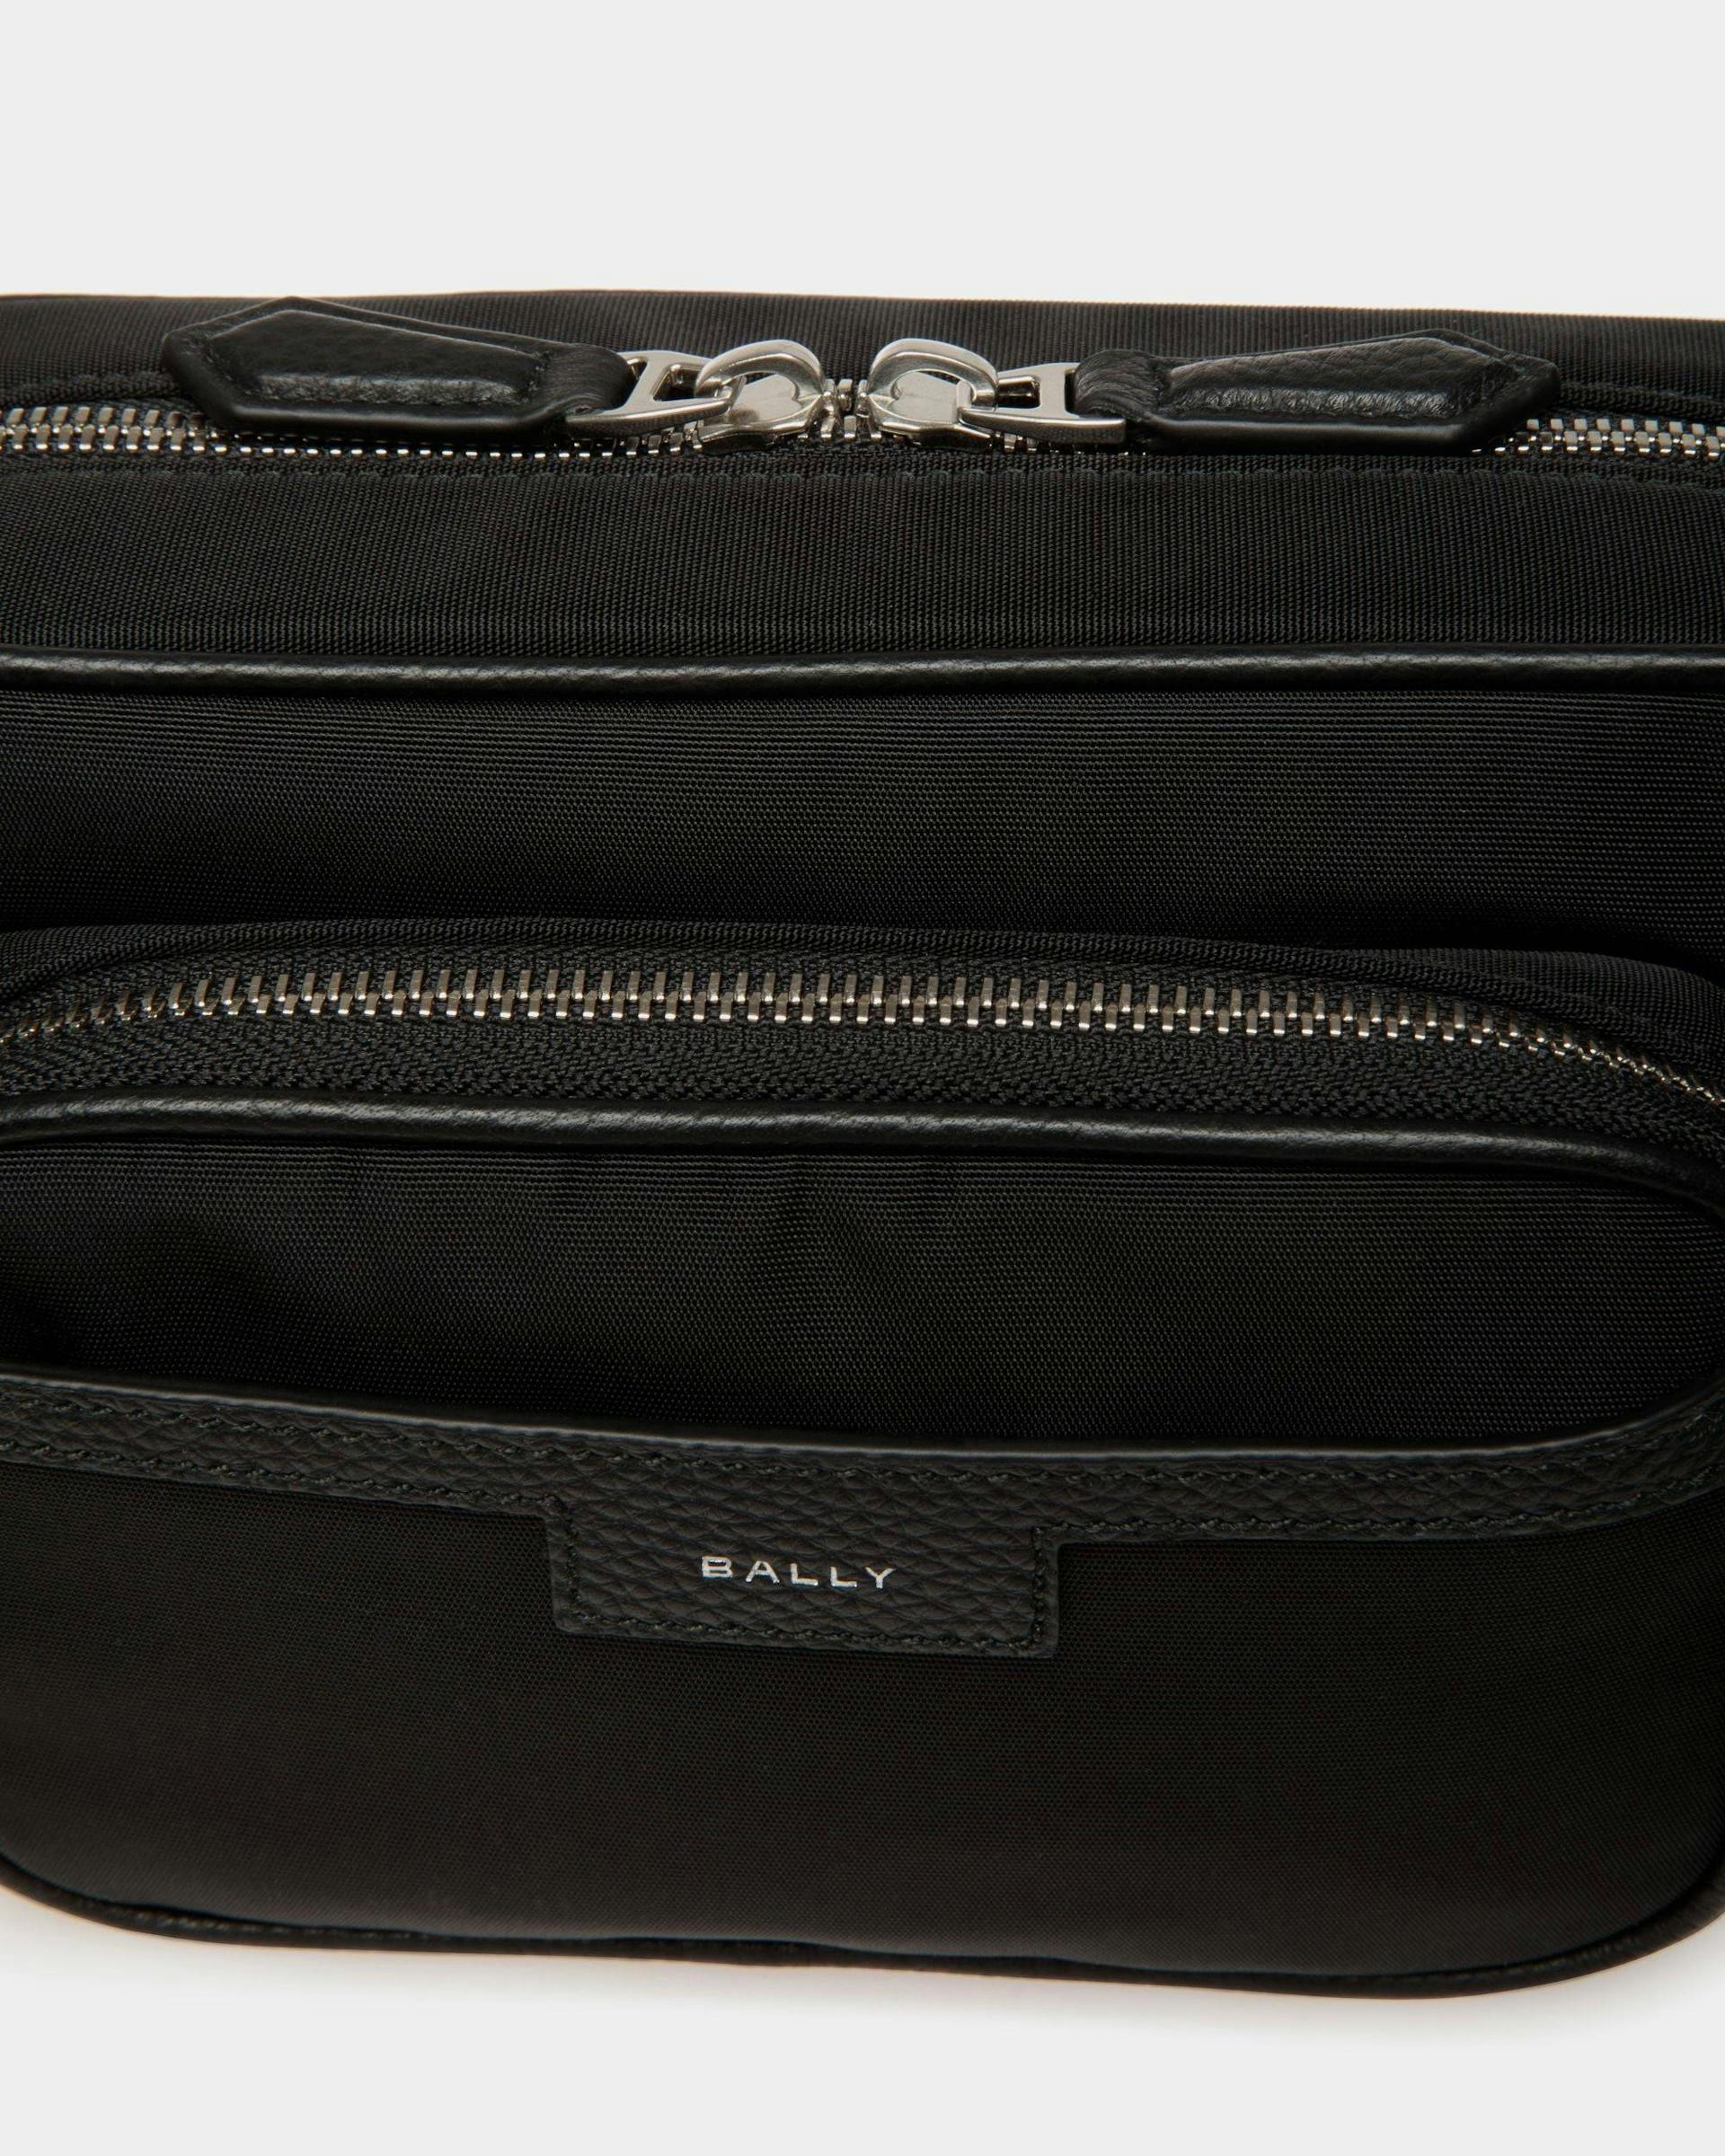 Men's Code Crossbody Bag in Black Nylon | Bally | Still Life Detail